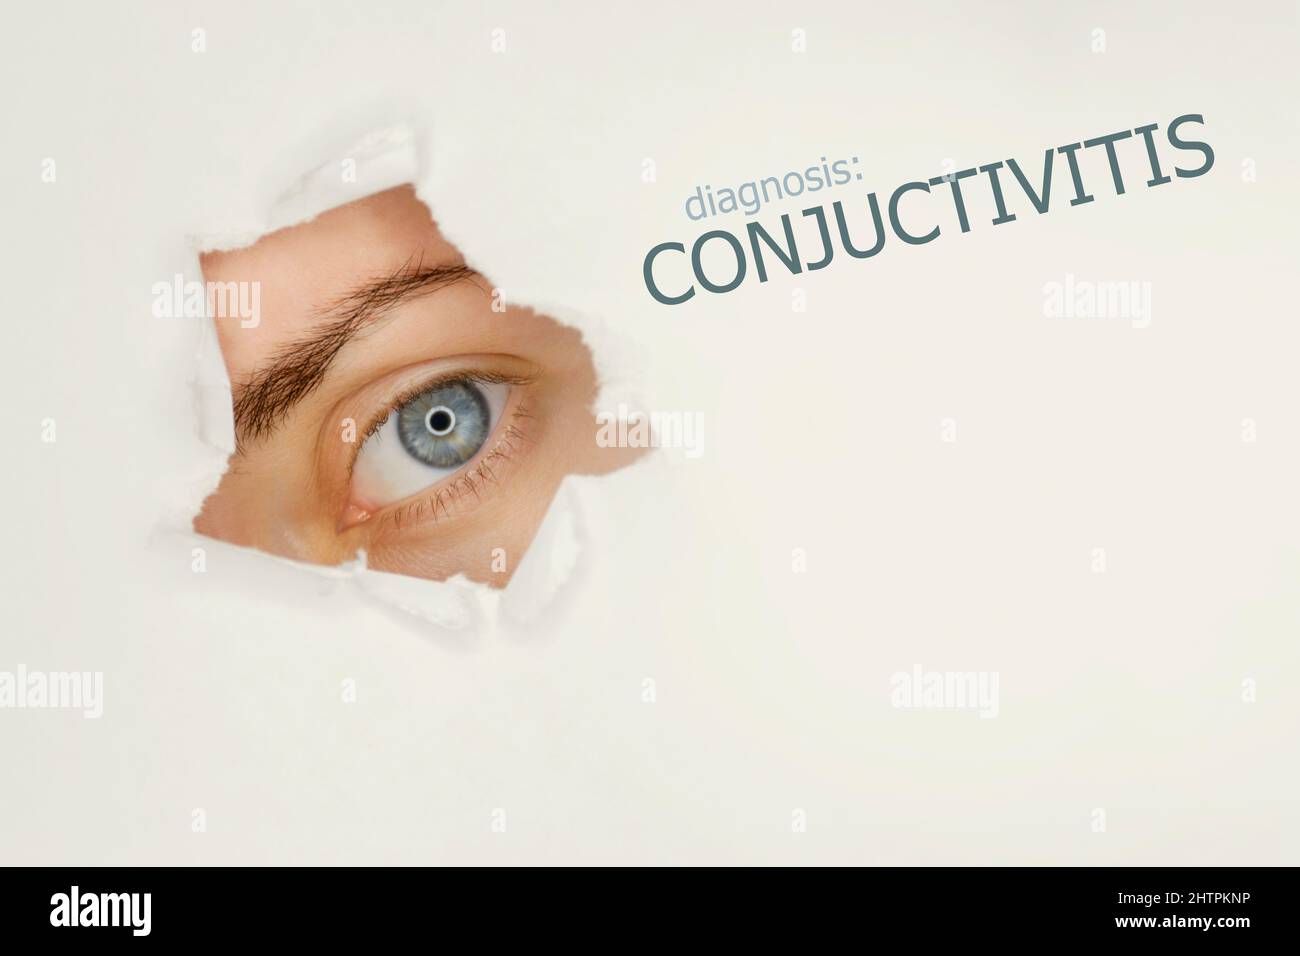 Conjuctivitis disease poster with blue eye on left. Studio grey background Stock Photo